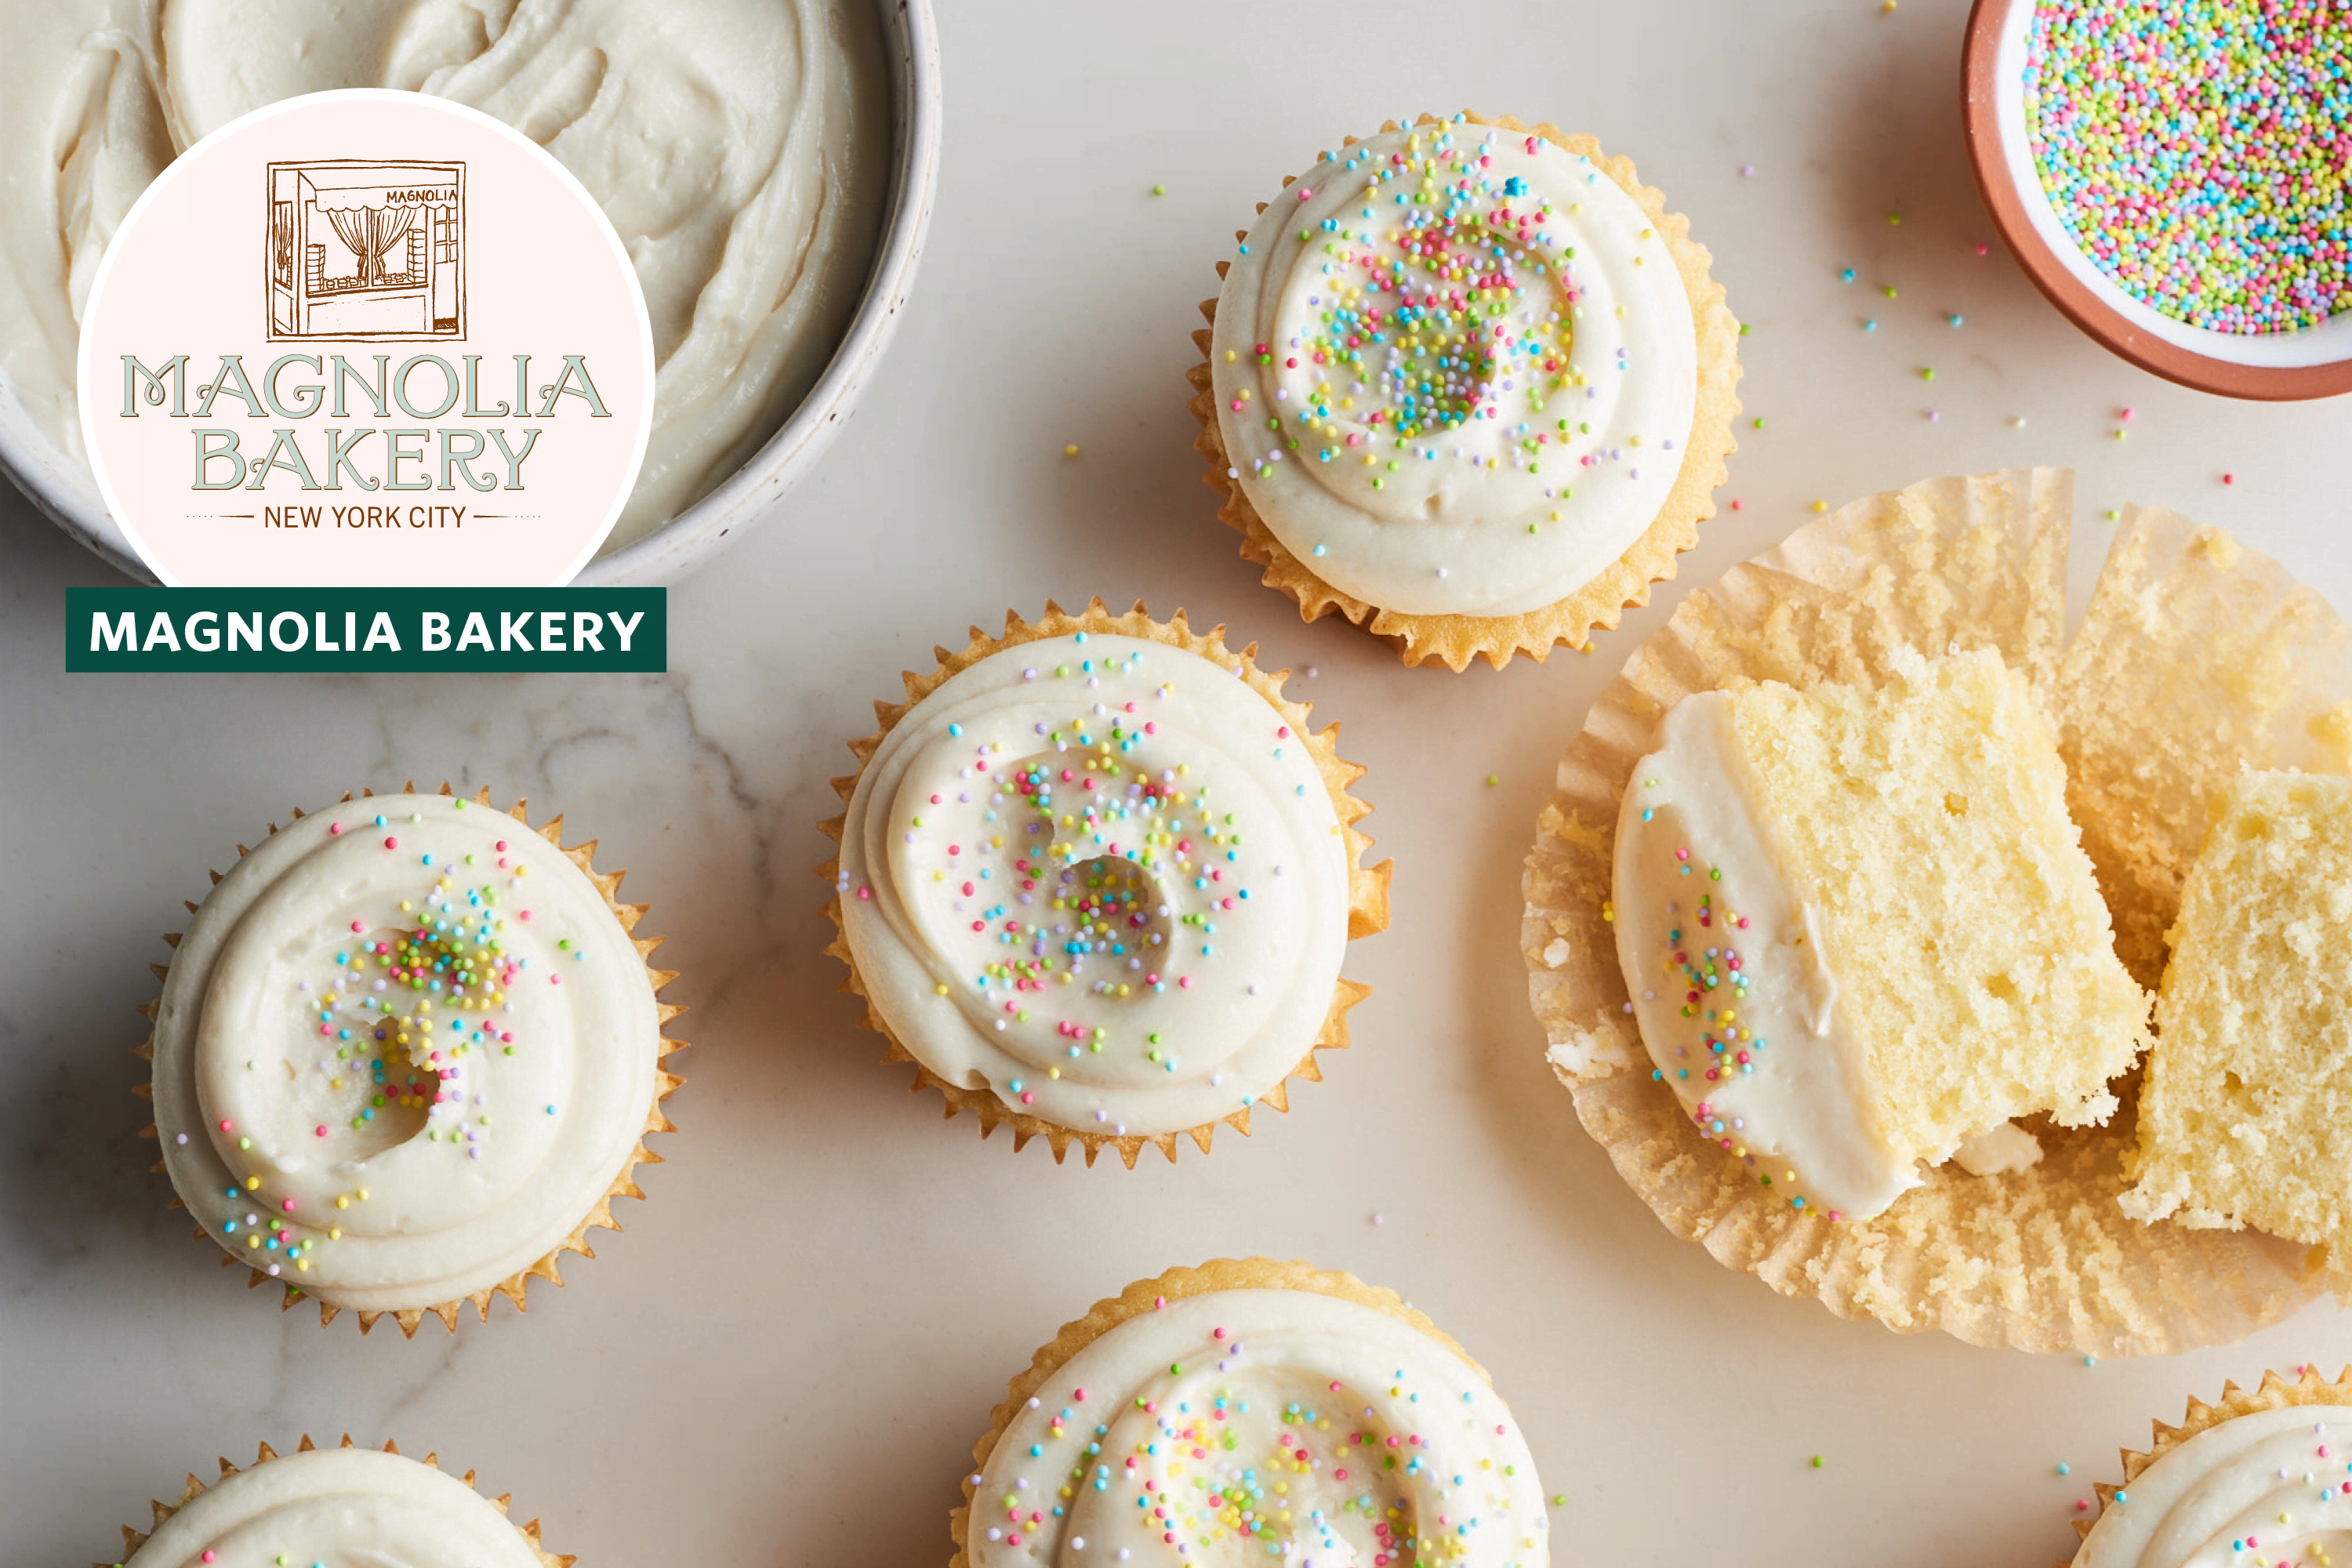 Custom Cakes by Magnolia Bakery | Bakery, Magnolias bakery, Cake pricing